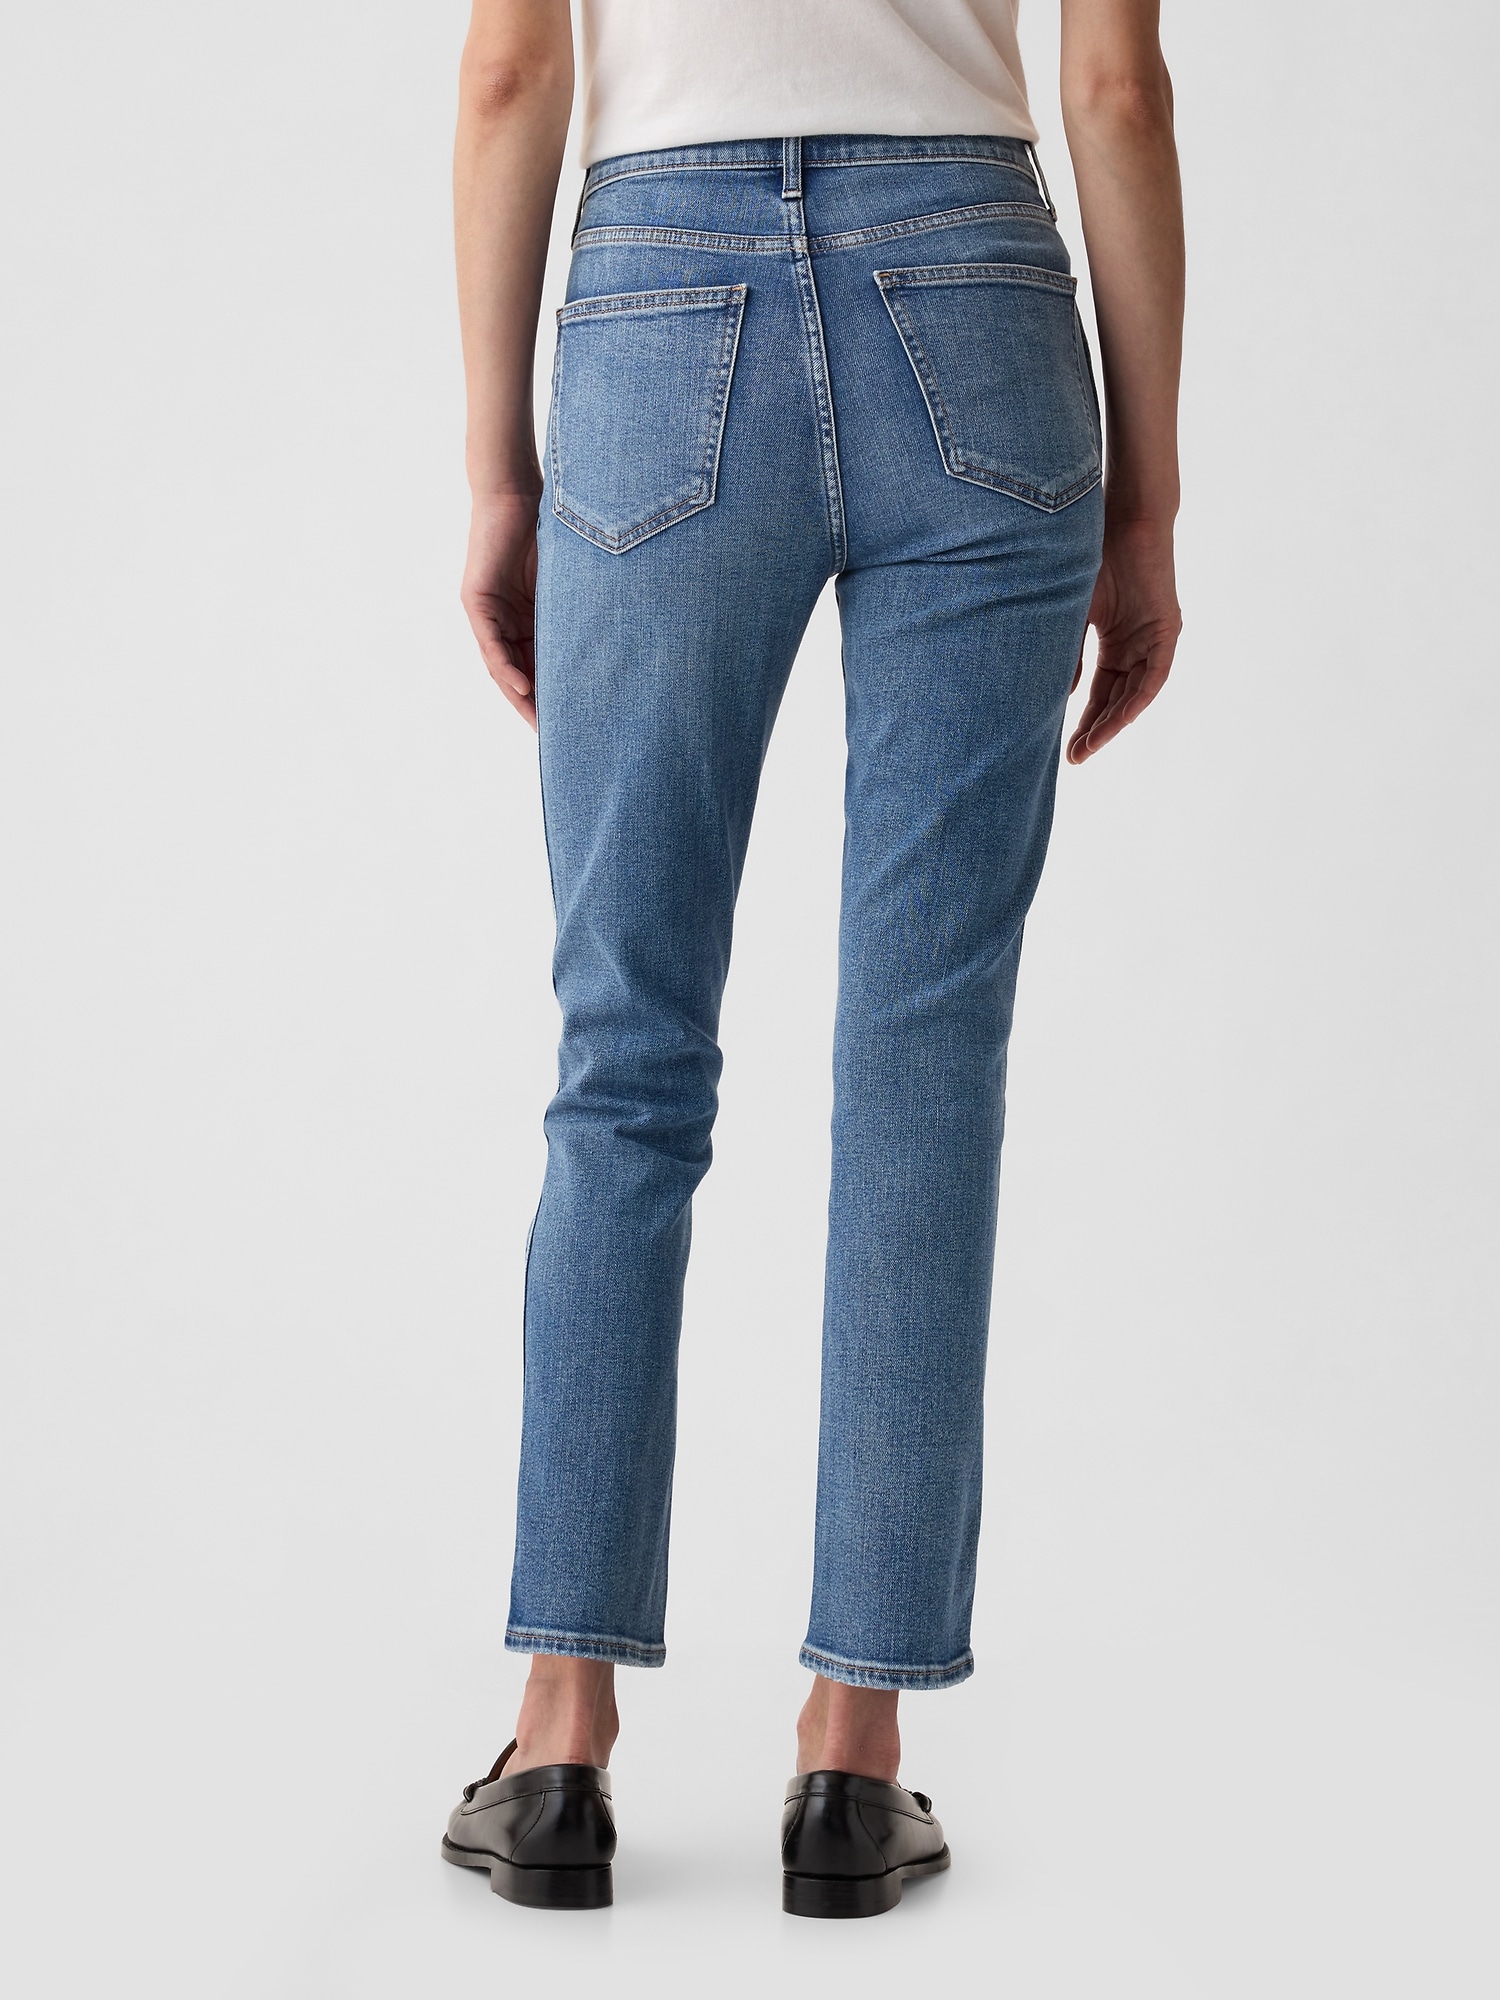 GAP Jeans Womens 30/10 Medium Indigo Vintage Slim Sky High Rise